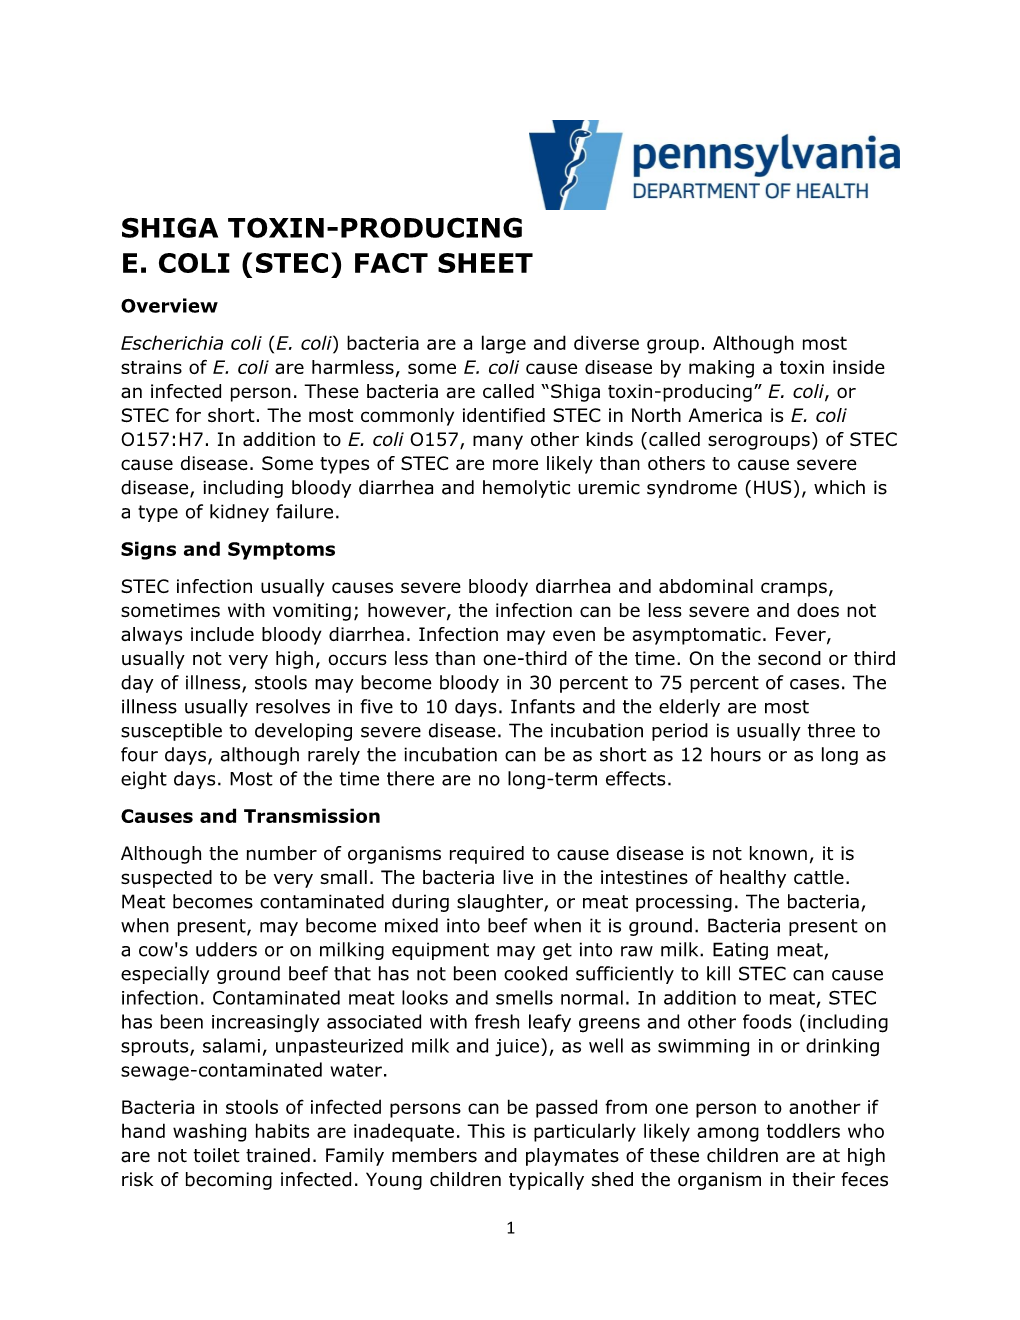 Shiga Toxin-Producing E. Coli (Stec) Fact Sheet